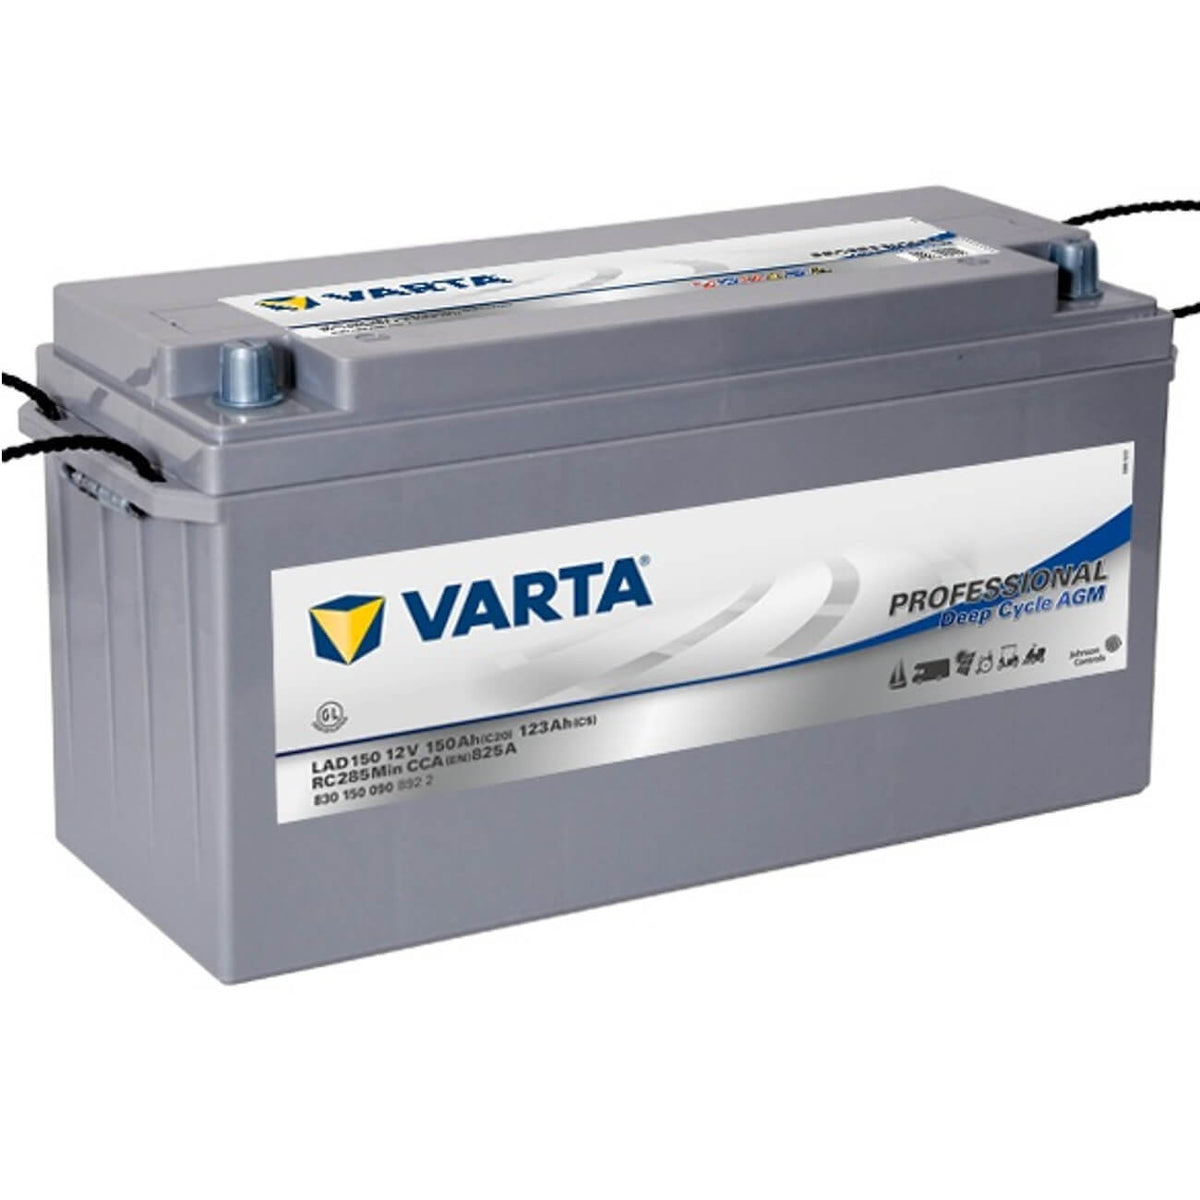 Varta LAD150 Professional AGM 12V 150Ah Batterie